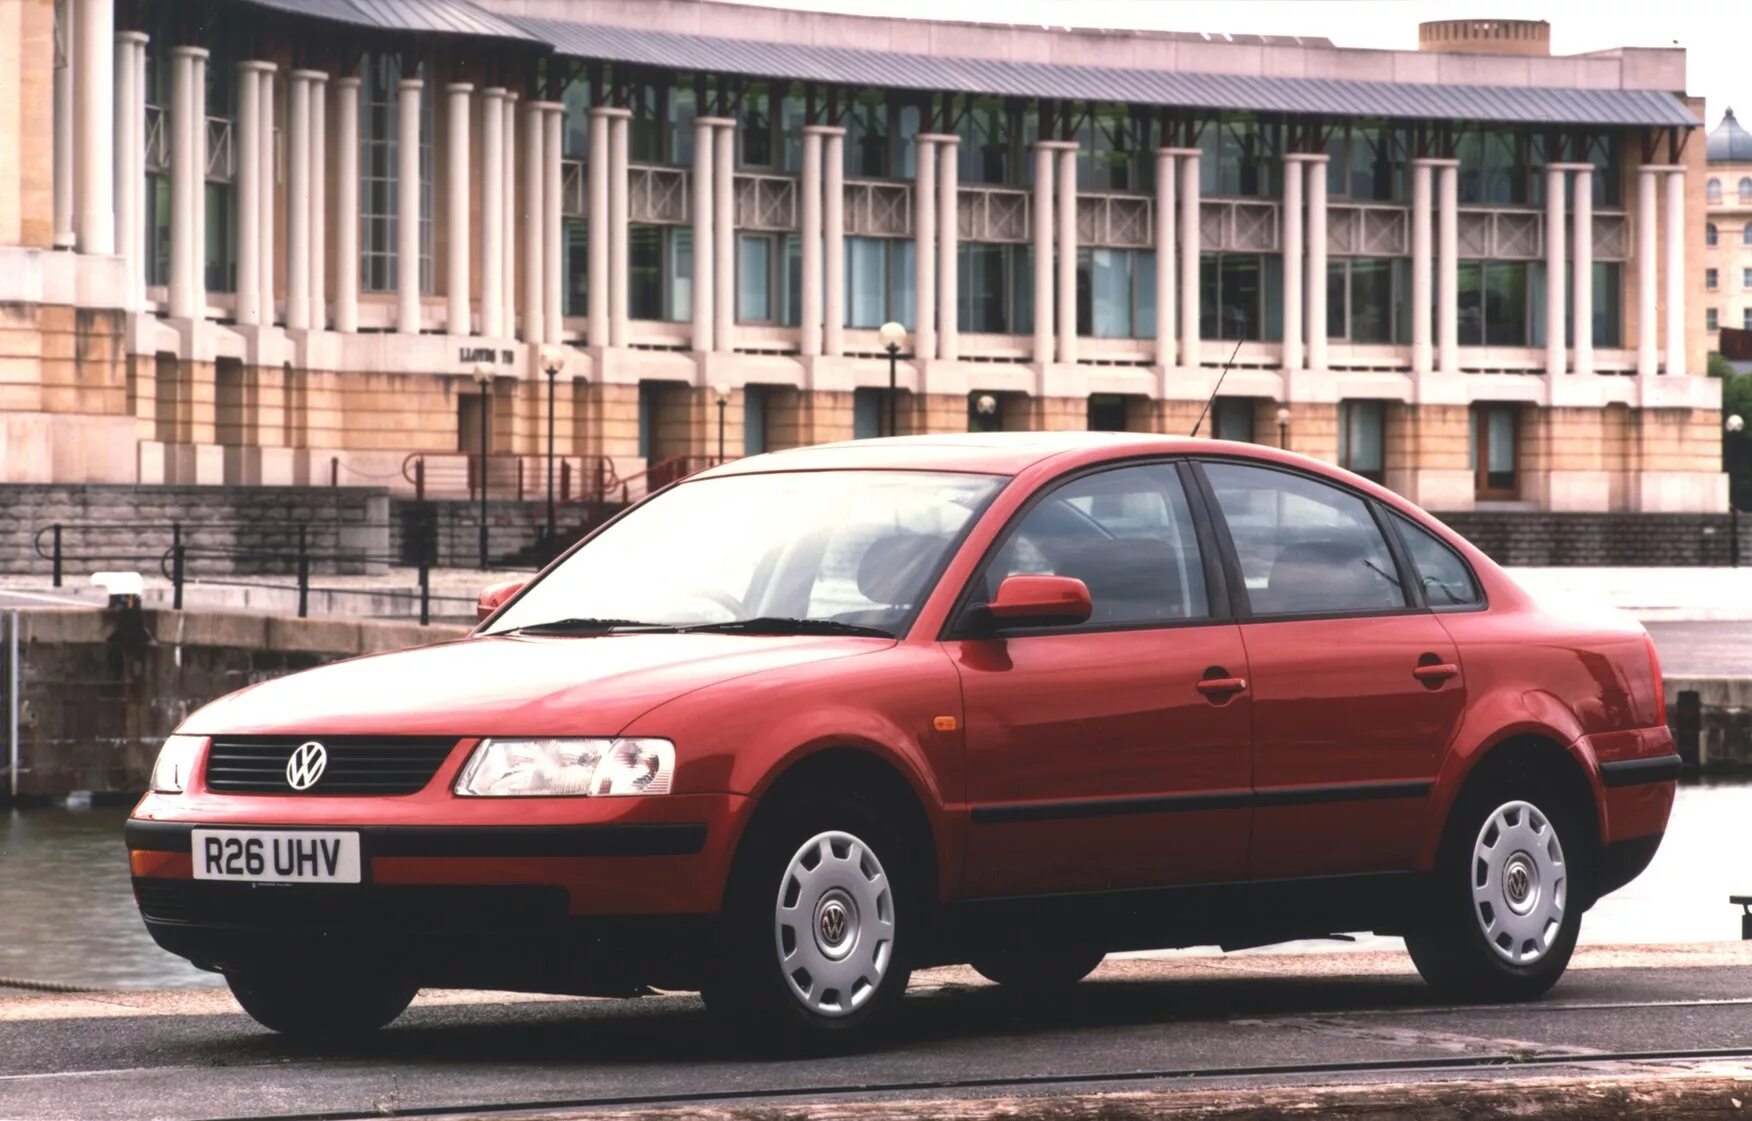 Пассат 1998 г. VW Passat 1998. Фольксваген Passat 1998. Фольксваген Пассат 1998 года. Фольксваген Пассат 1996 года.